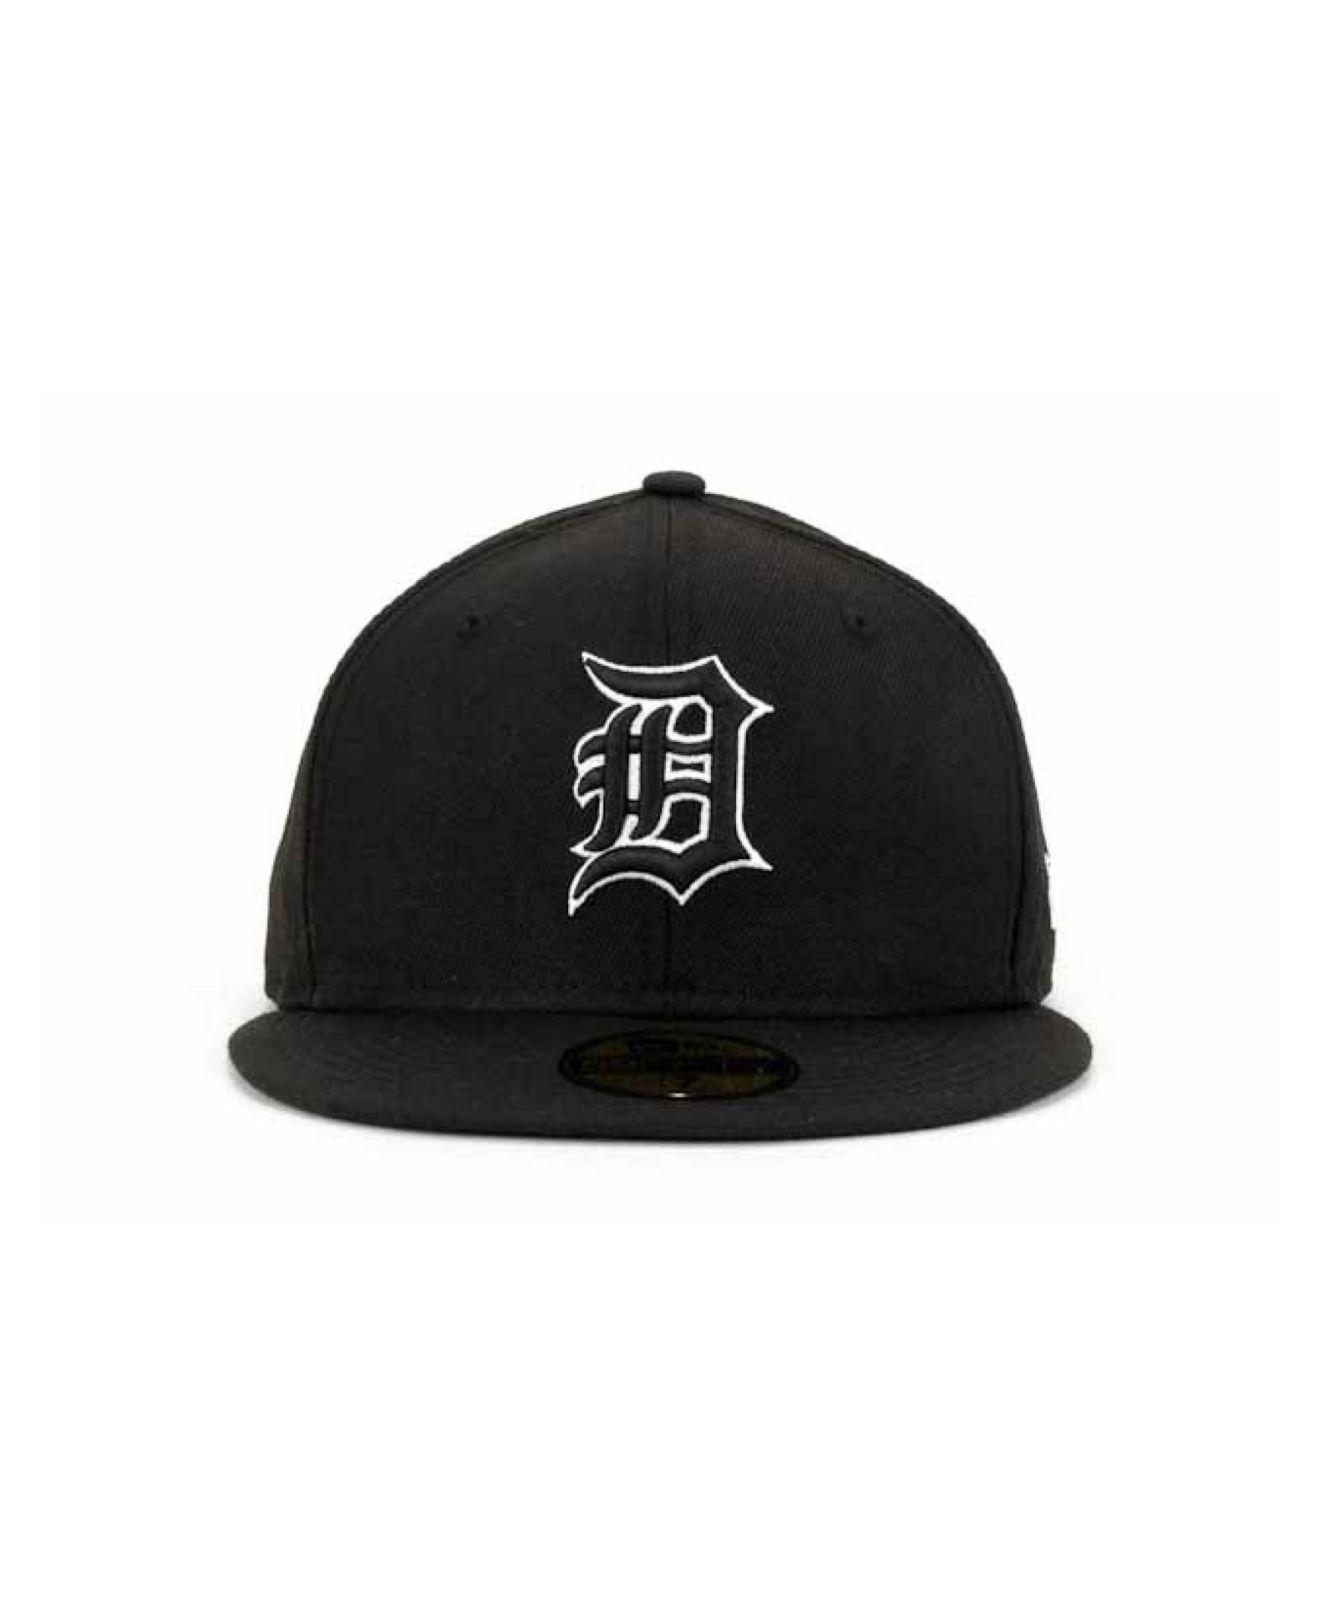 KTZ Detroit Tigers Black And White Fashion 59fifty Cap for Men